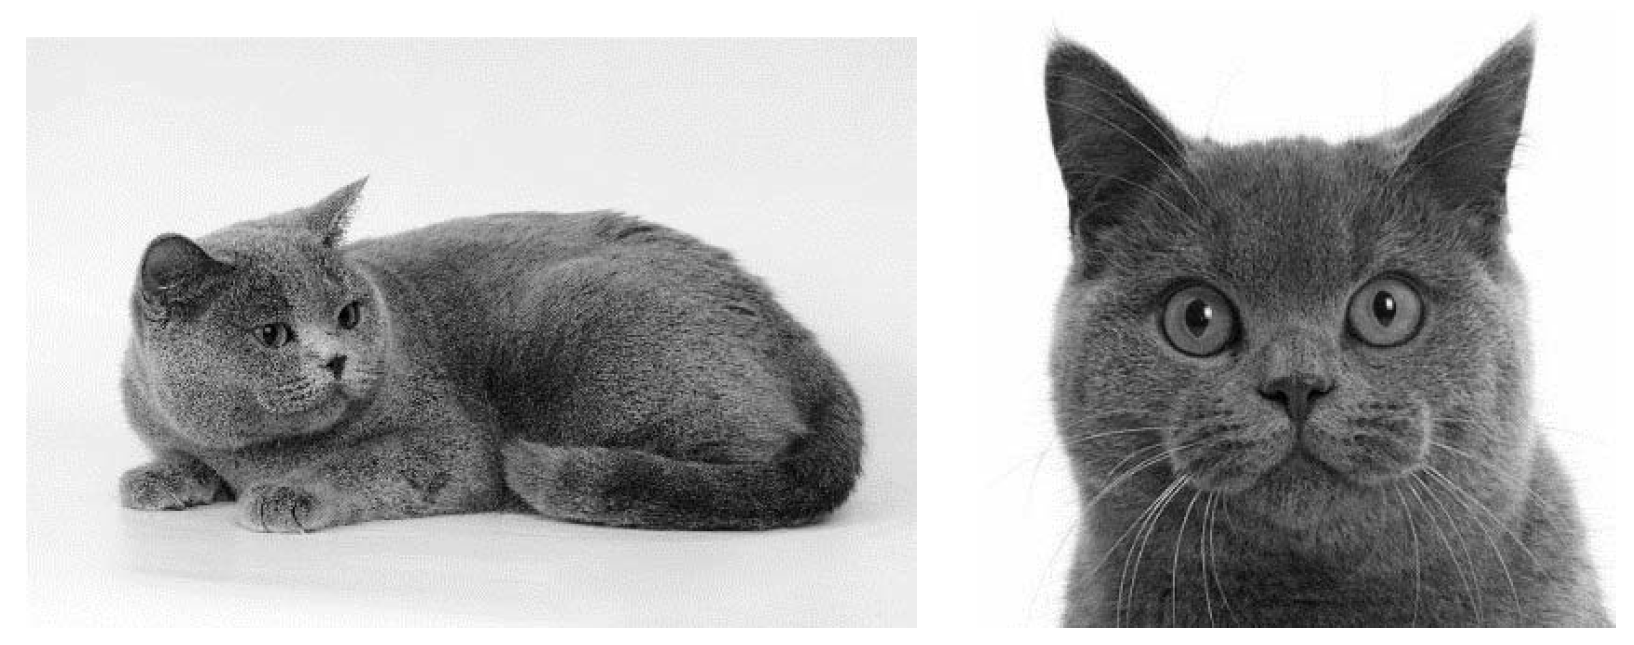 Стандарты британской породы кошек. Характеристика породы кошек по строению головы.